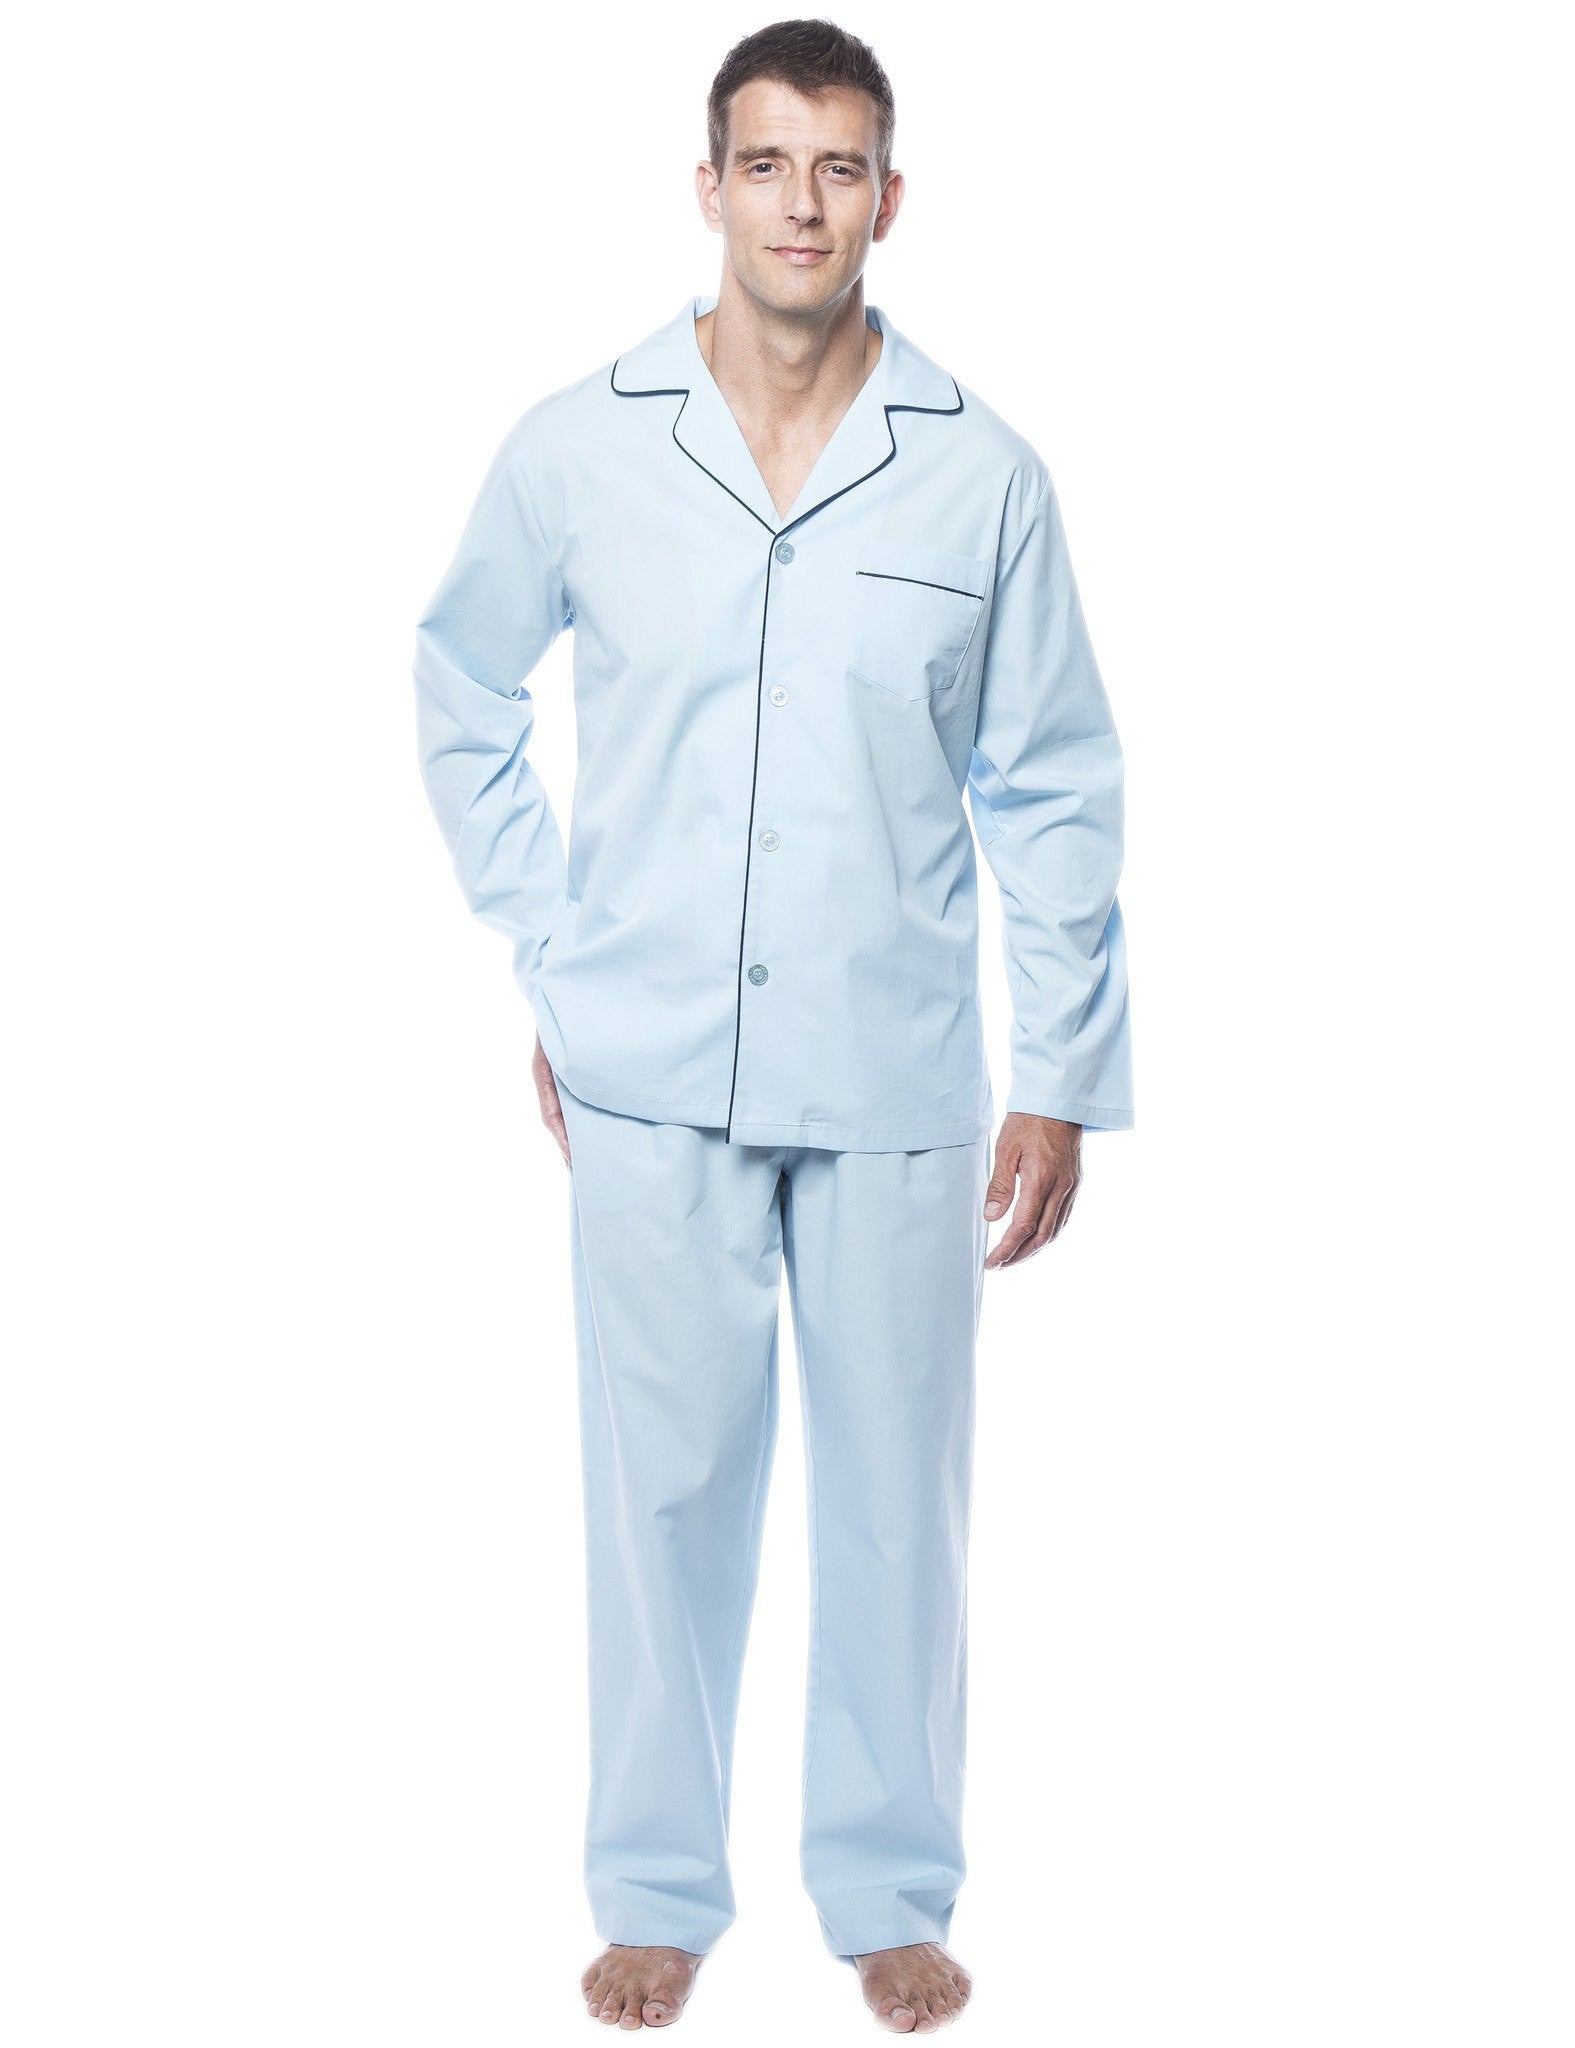 Men's 100% Woven Cotton Pajama Sleepwear Set